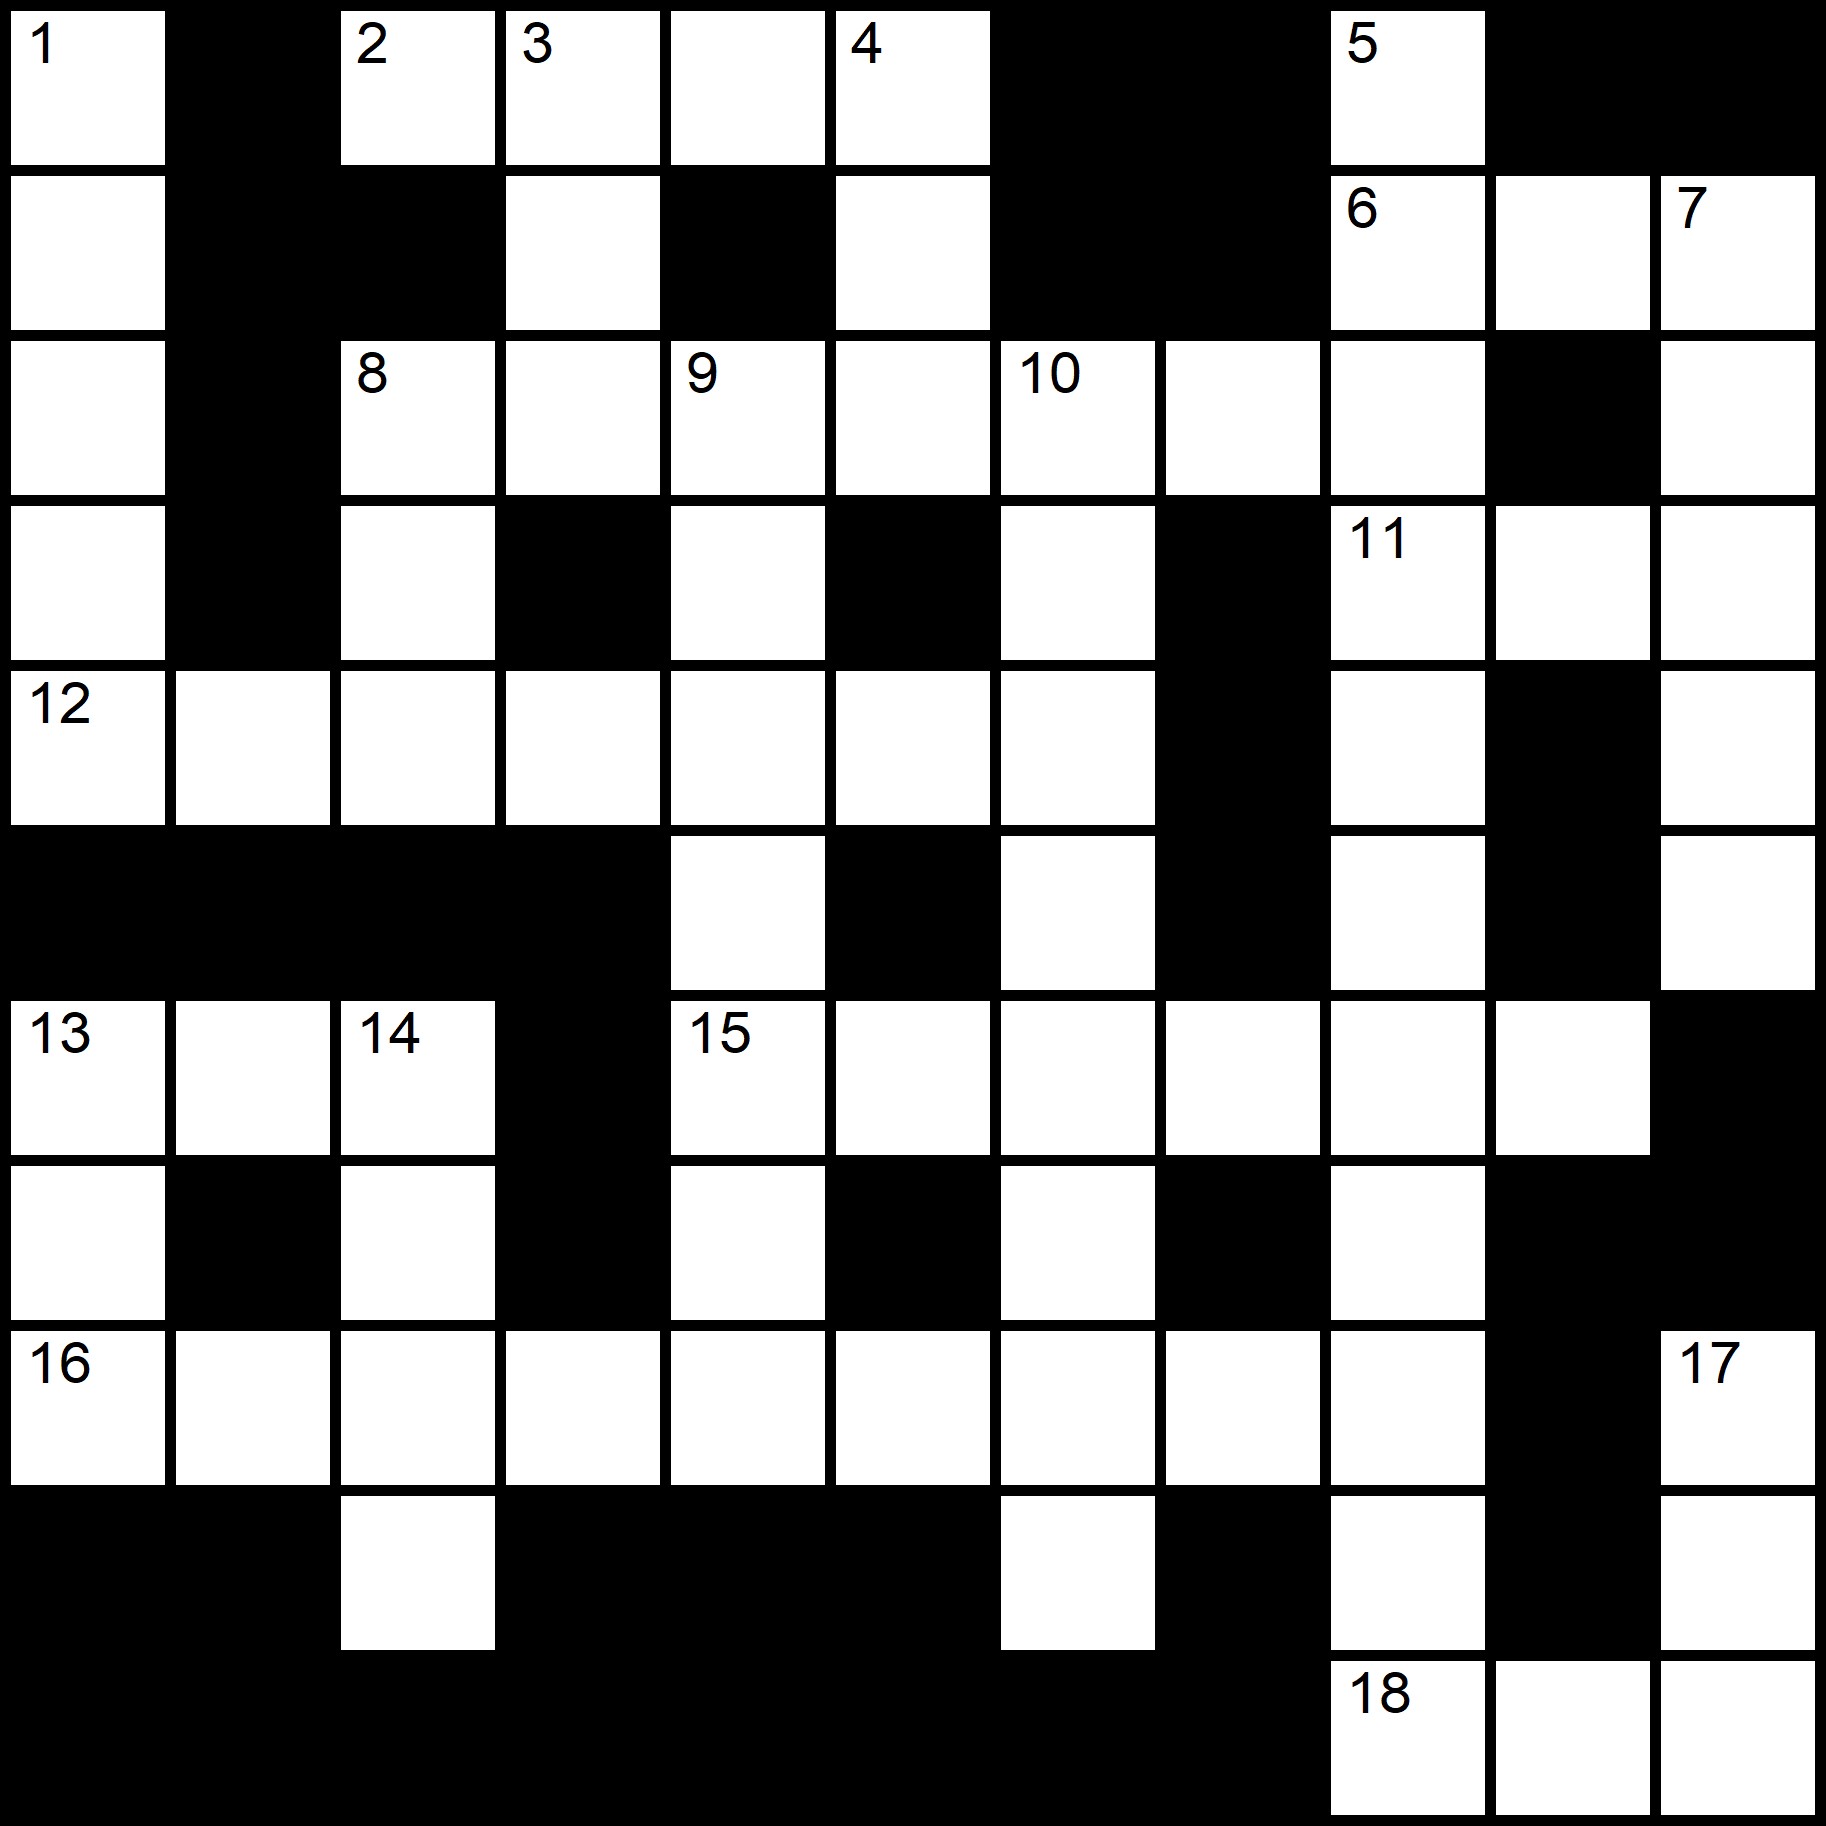 Easy Crossword Puzzles Printable Free -
Placidus Flora - Crossword number sixteen